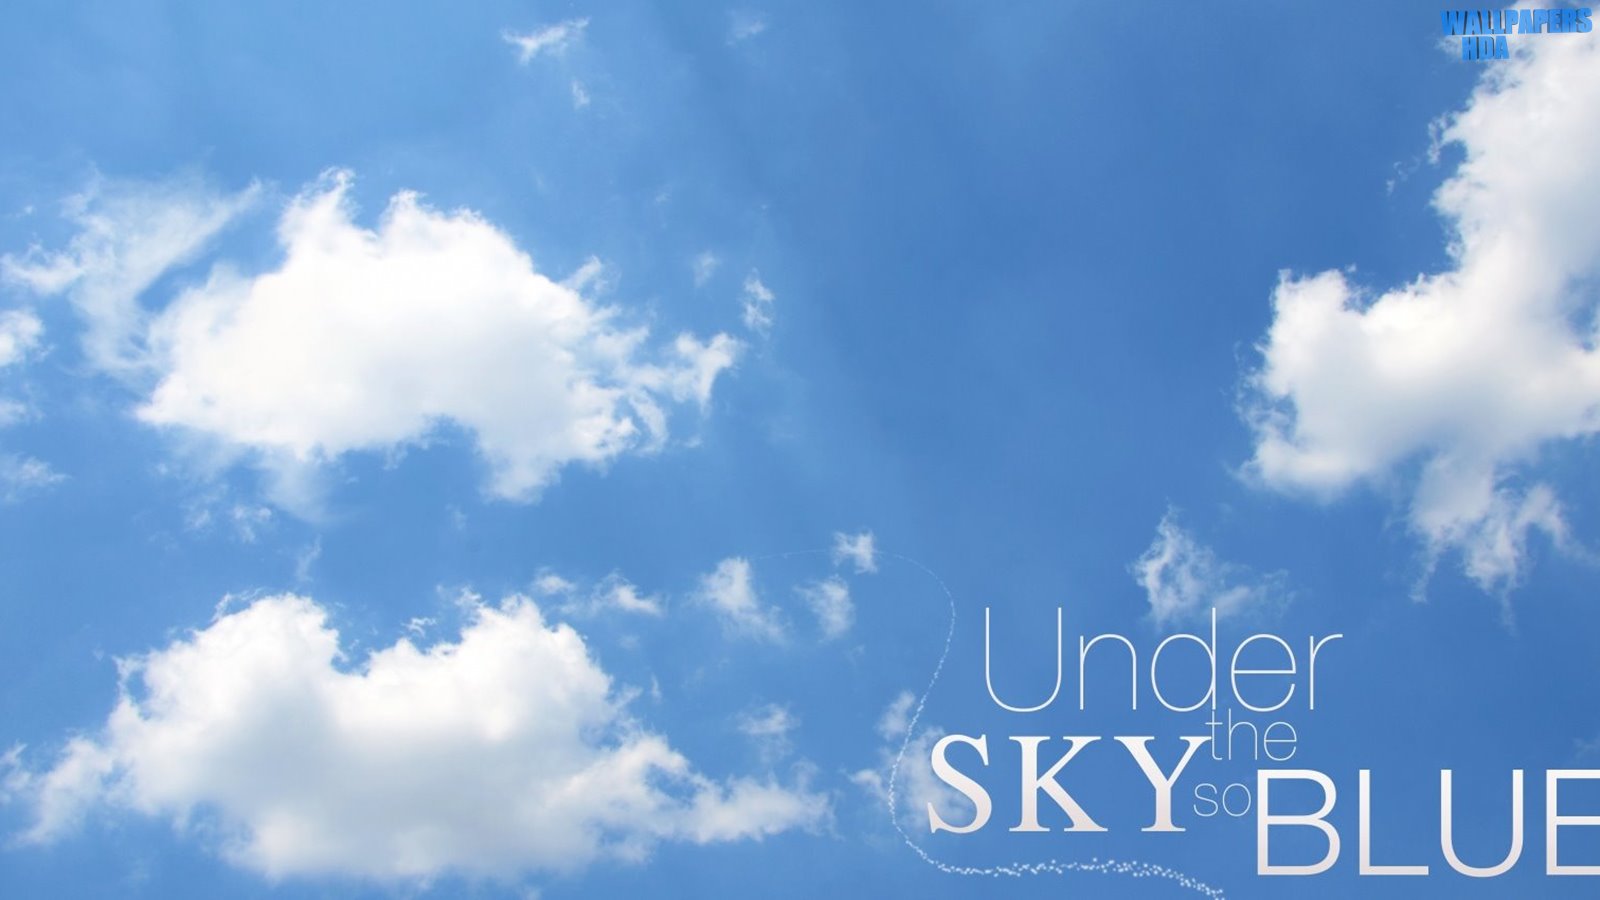 Under the sky so blue 2 wallpaper 1600x900